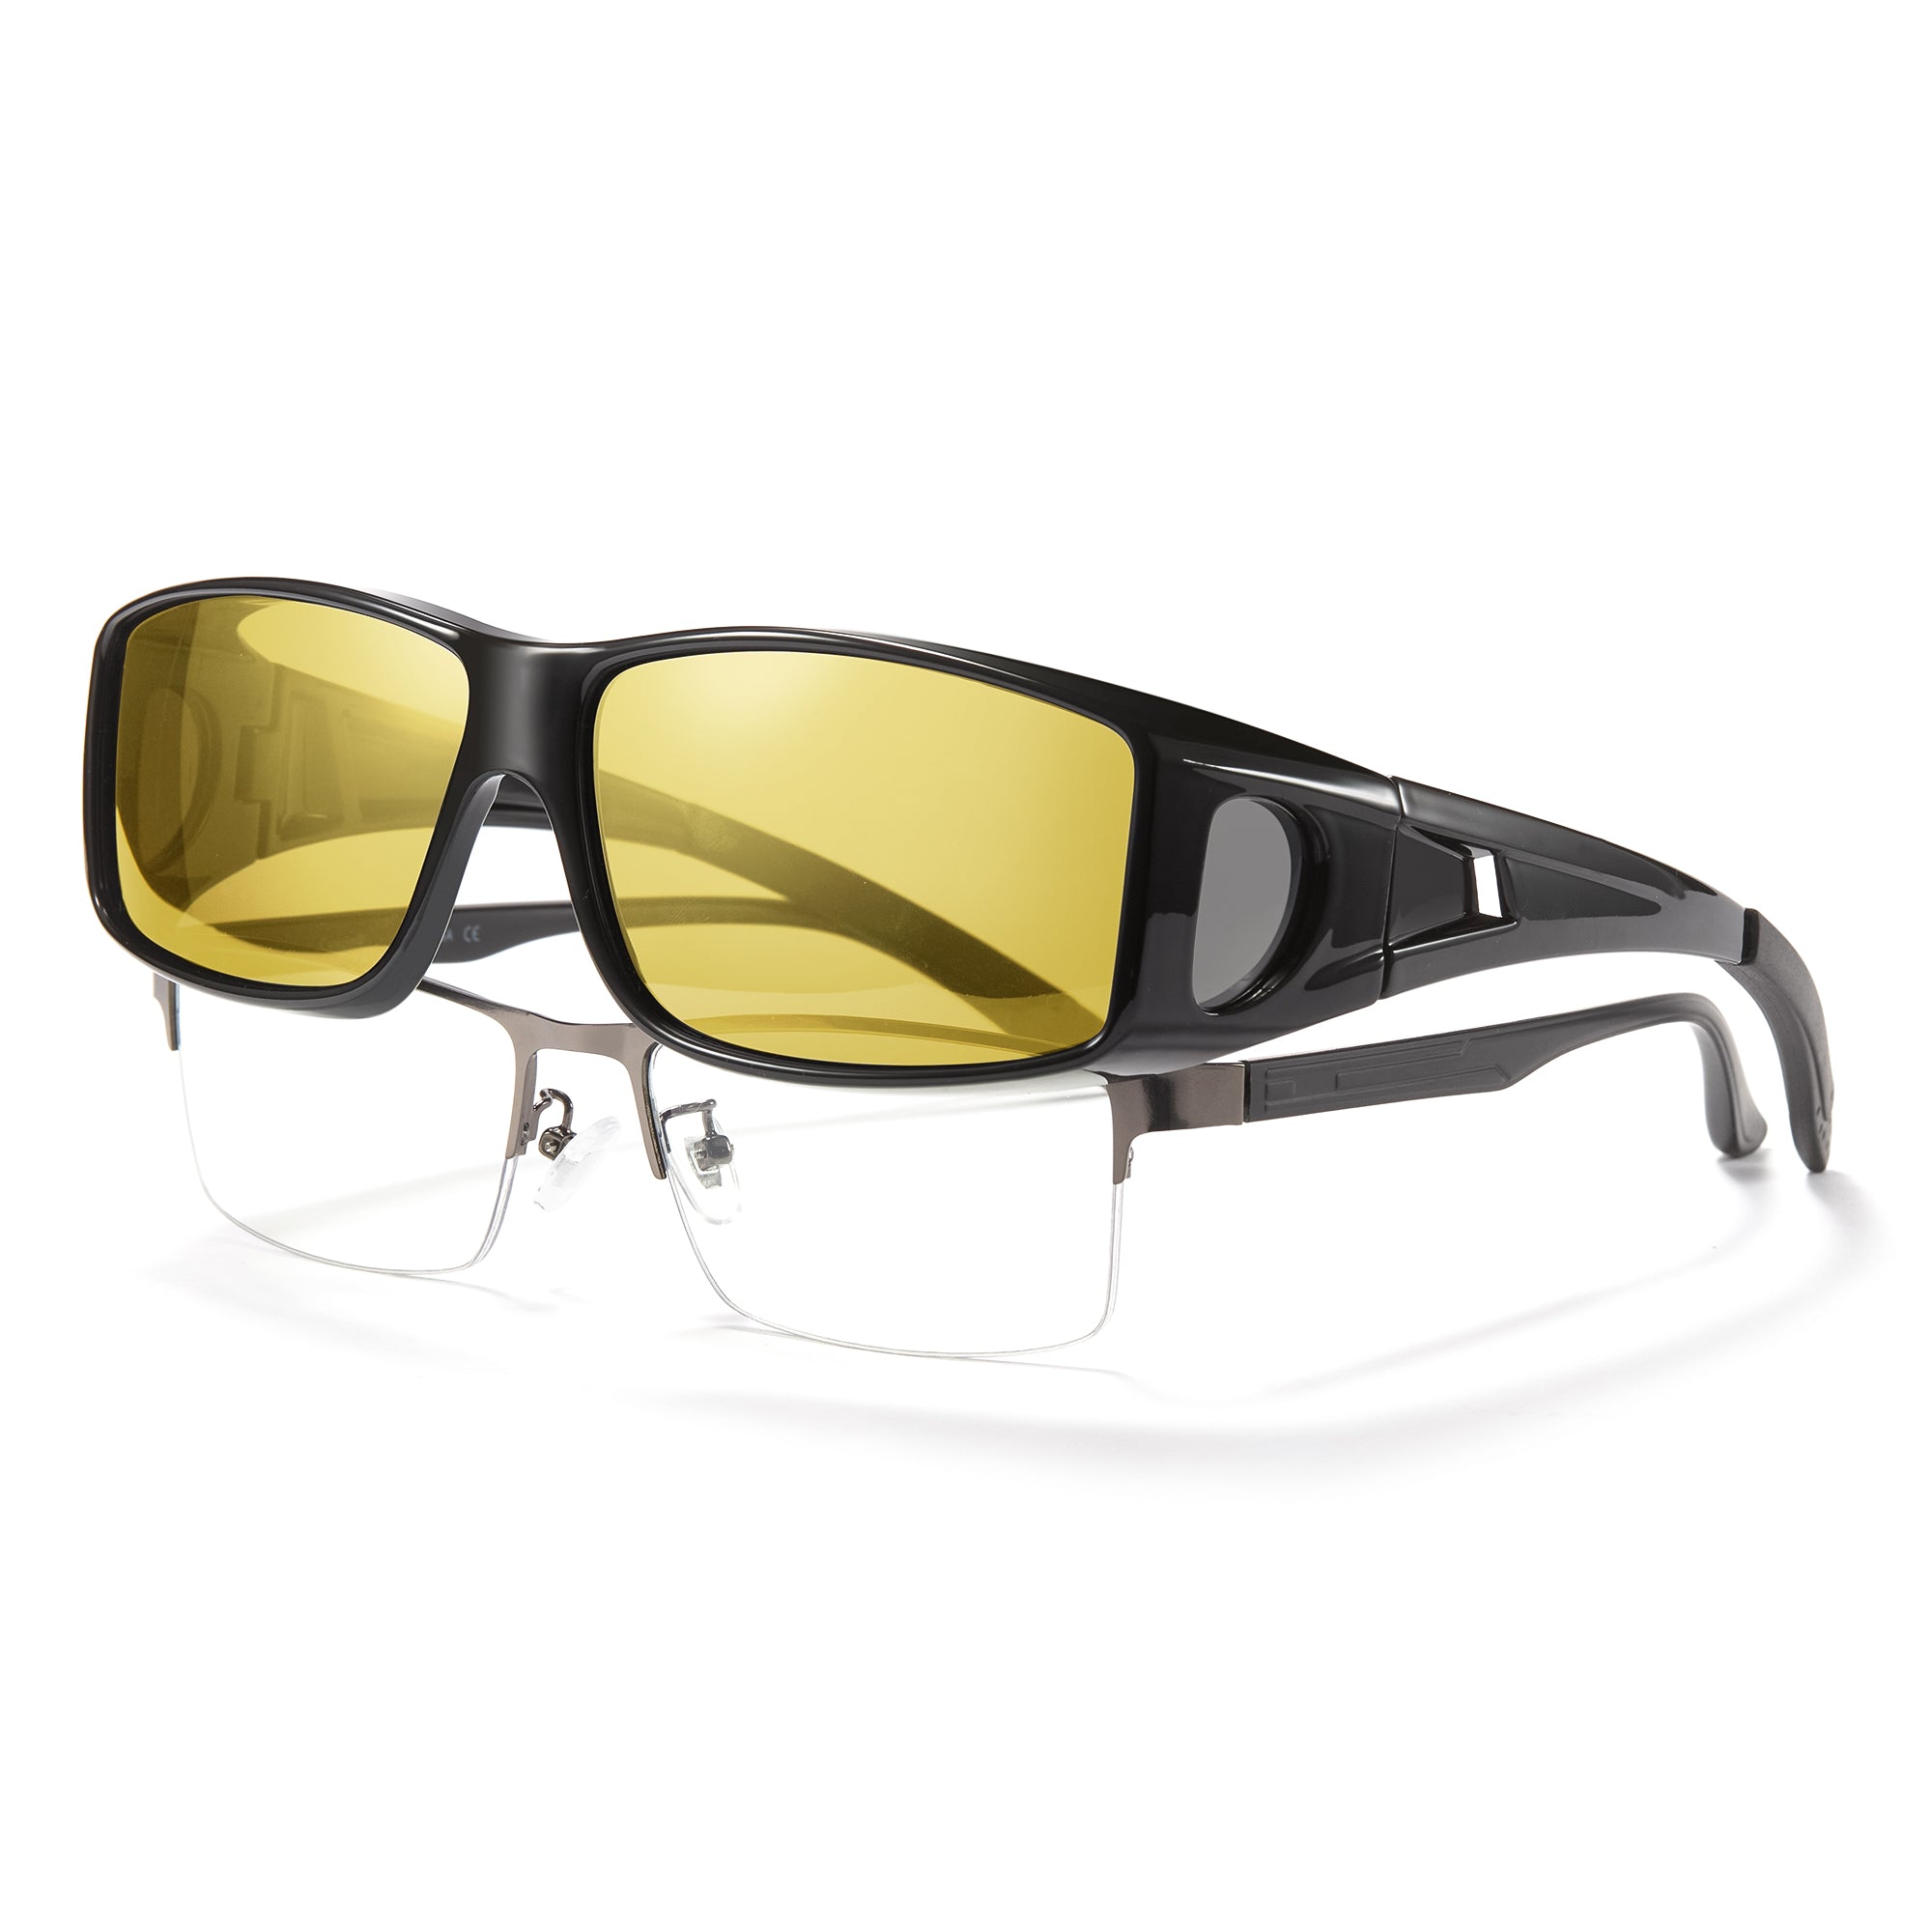 Polarized Fitover Sunglasses 1304